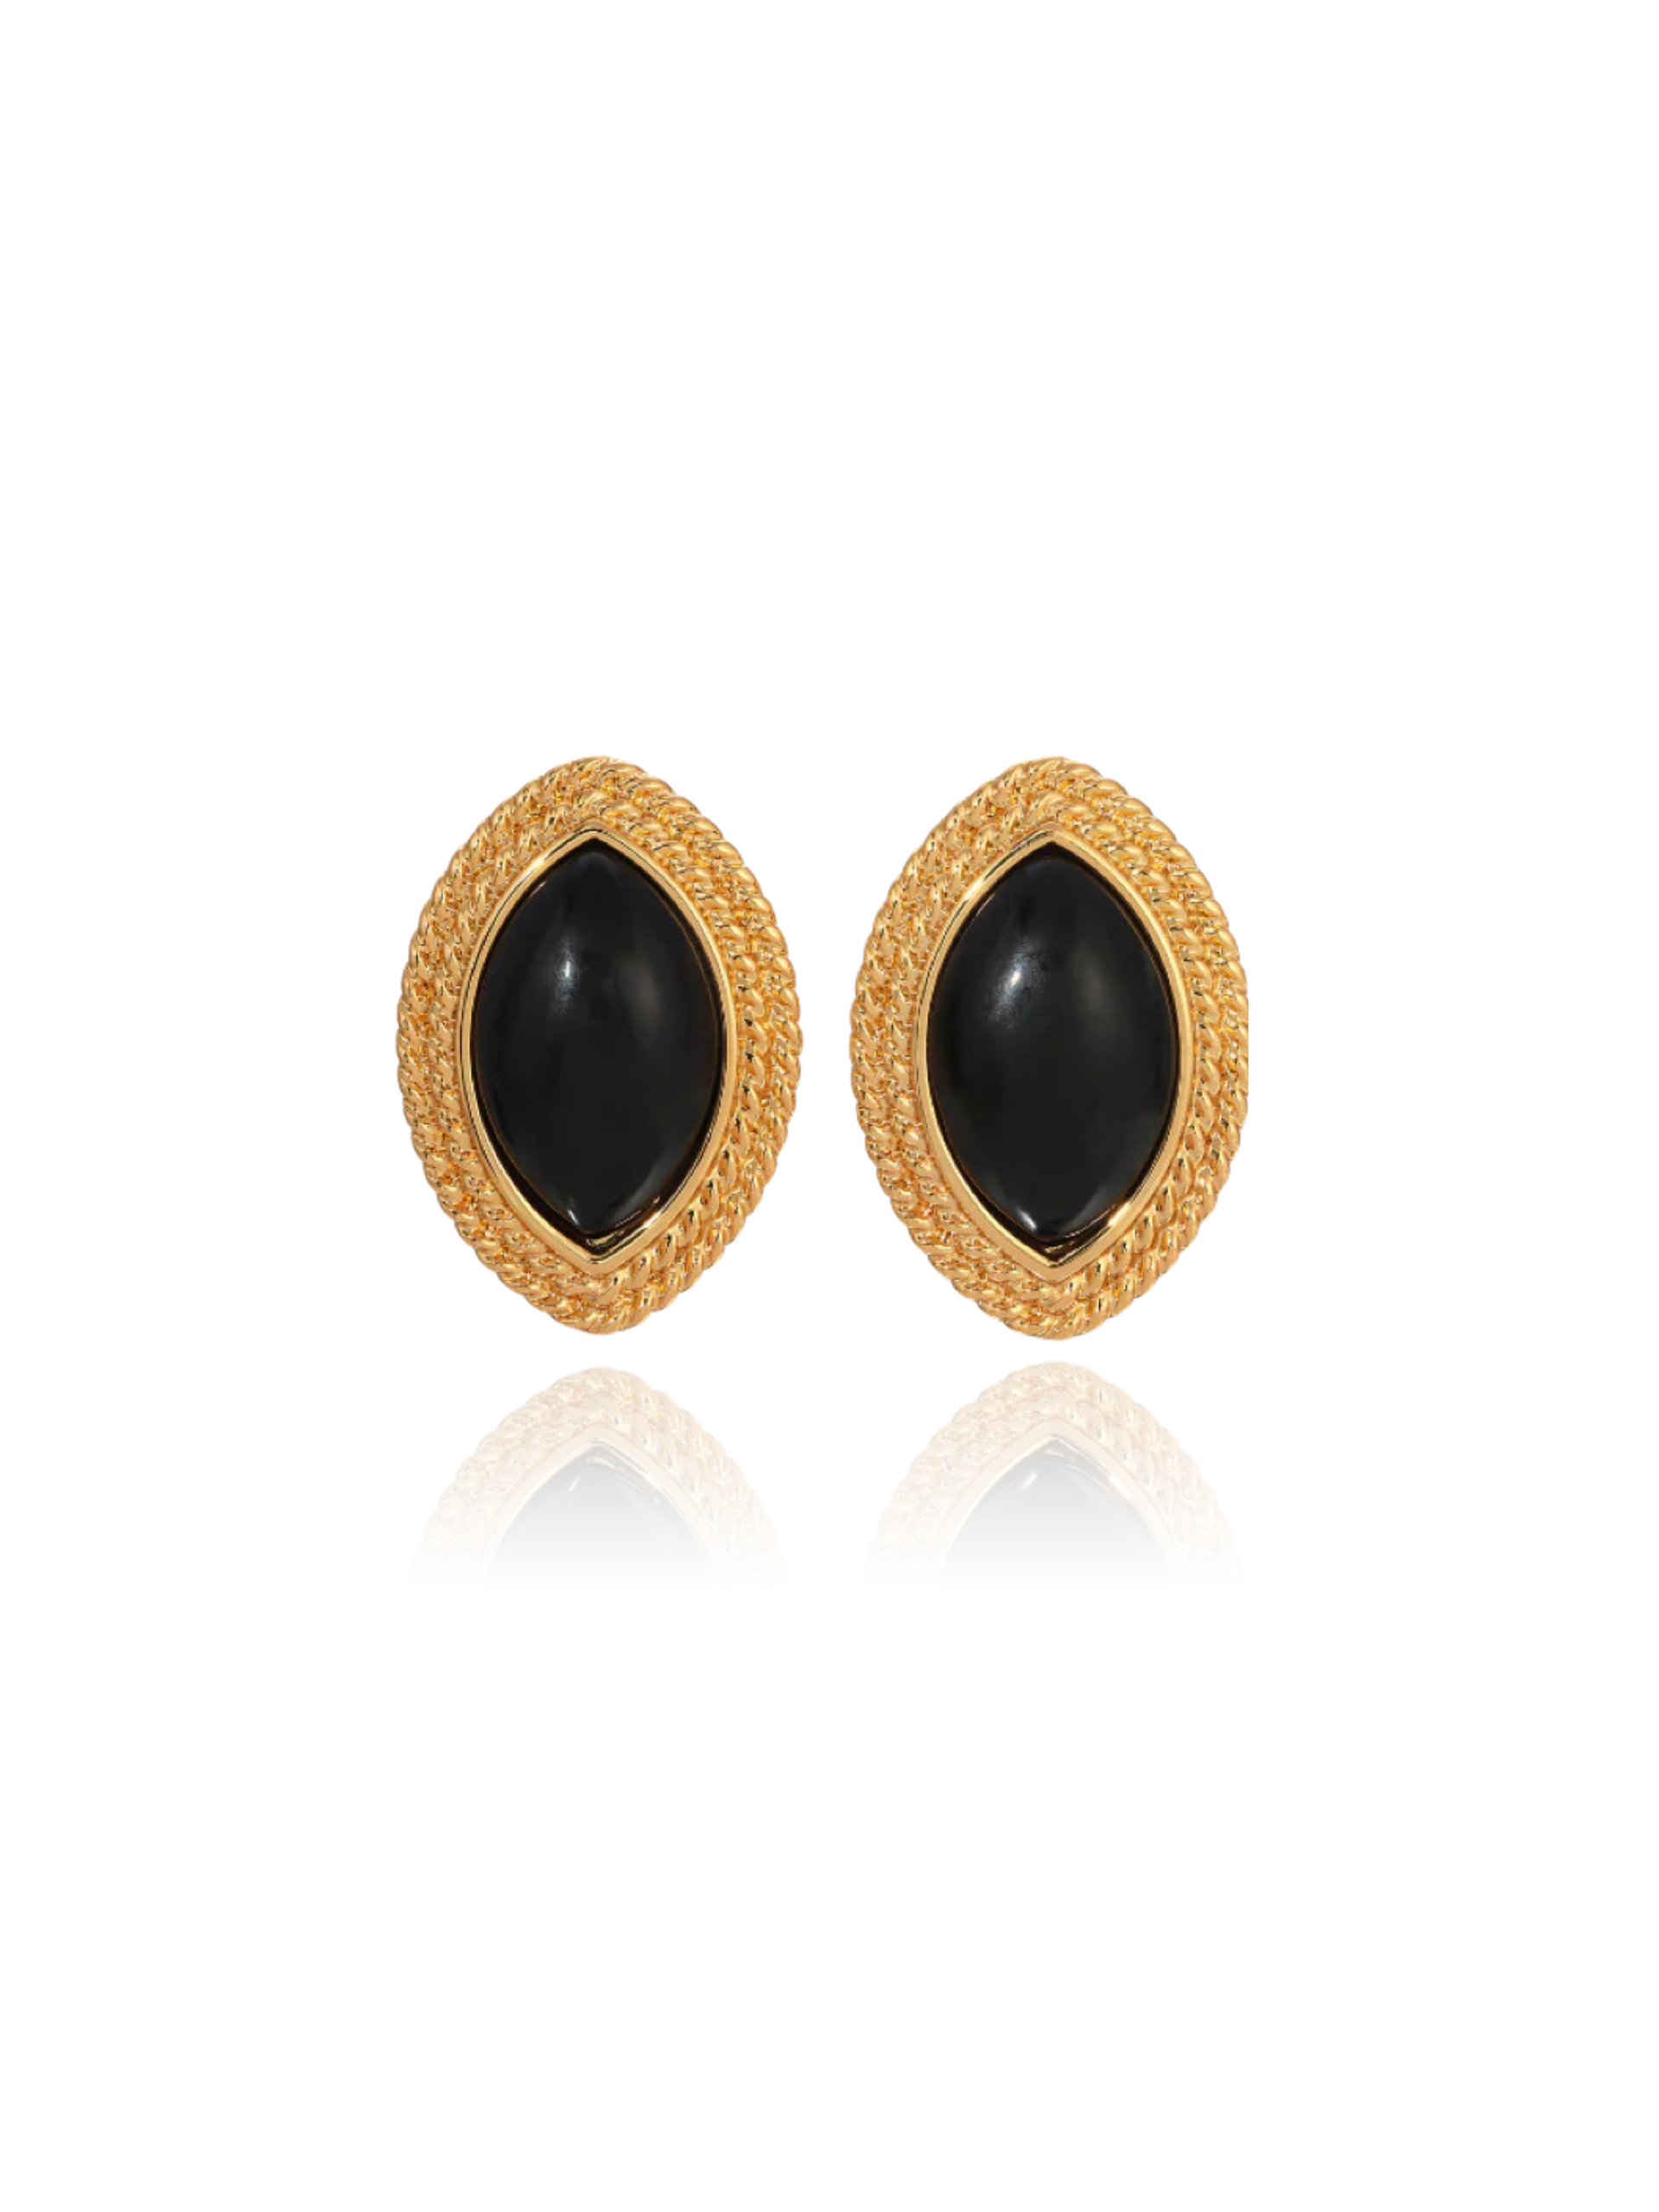 noir earrings - gold